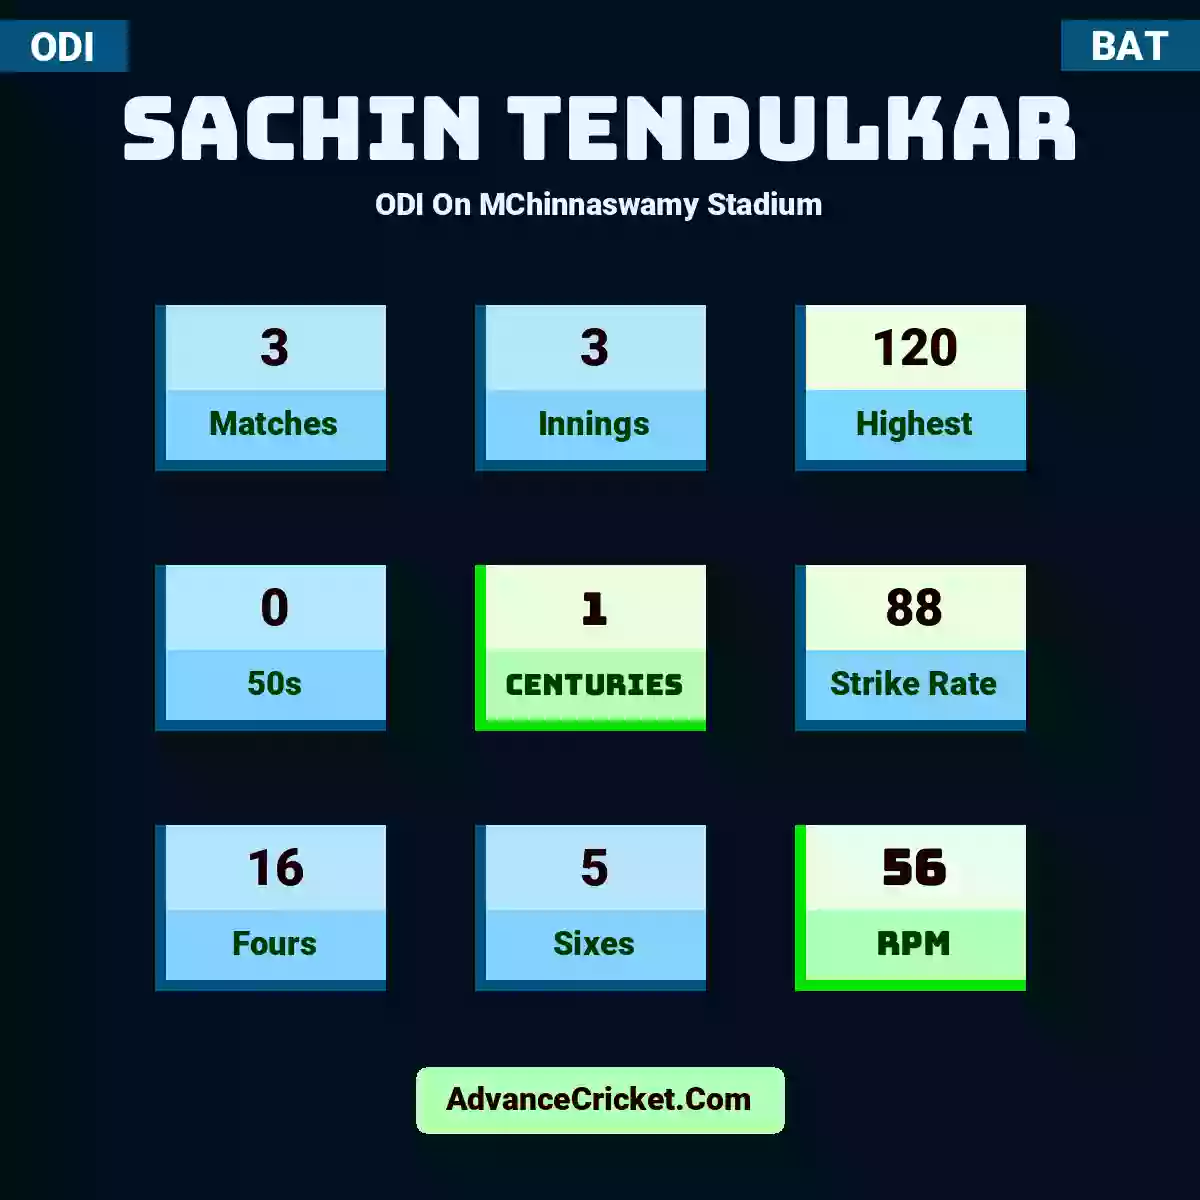 Sachin Tendulkar ODI  On MChinnaswamy Stadium, Sachin Tendulkar played 3 matches, scored 120 runs as highest, 0 half-centuries, and 1 centuries, with a strike rate of 88. S.Tendulkar hit 16 fours and 5 sixes, with an RPM of 56.